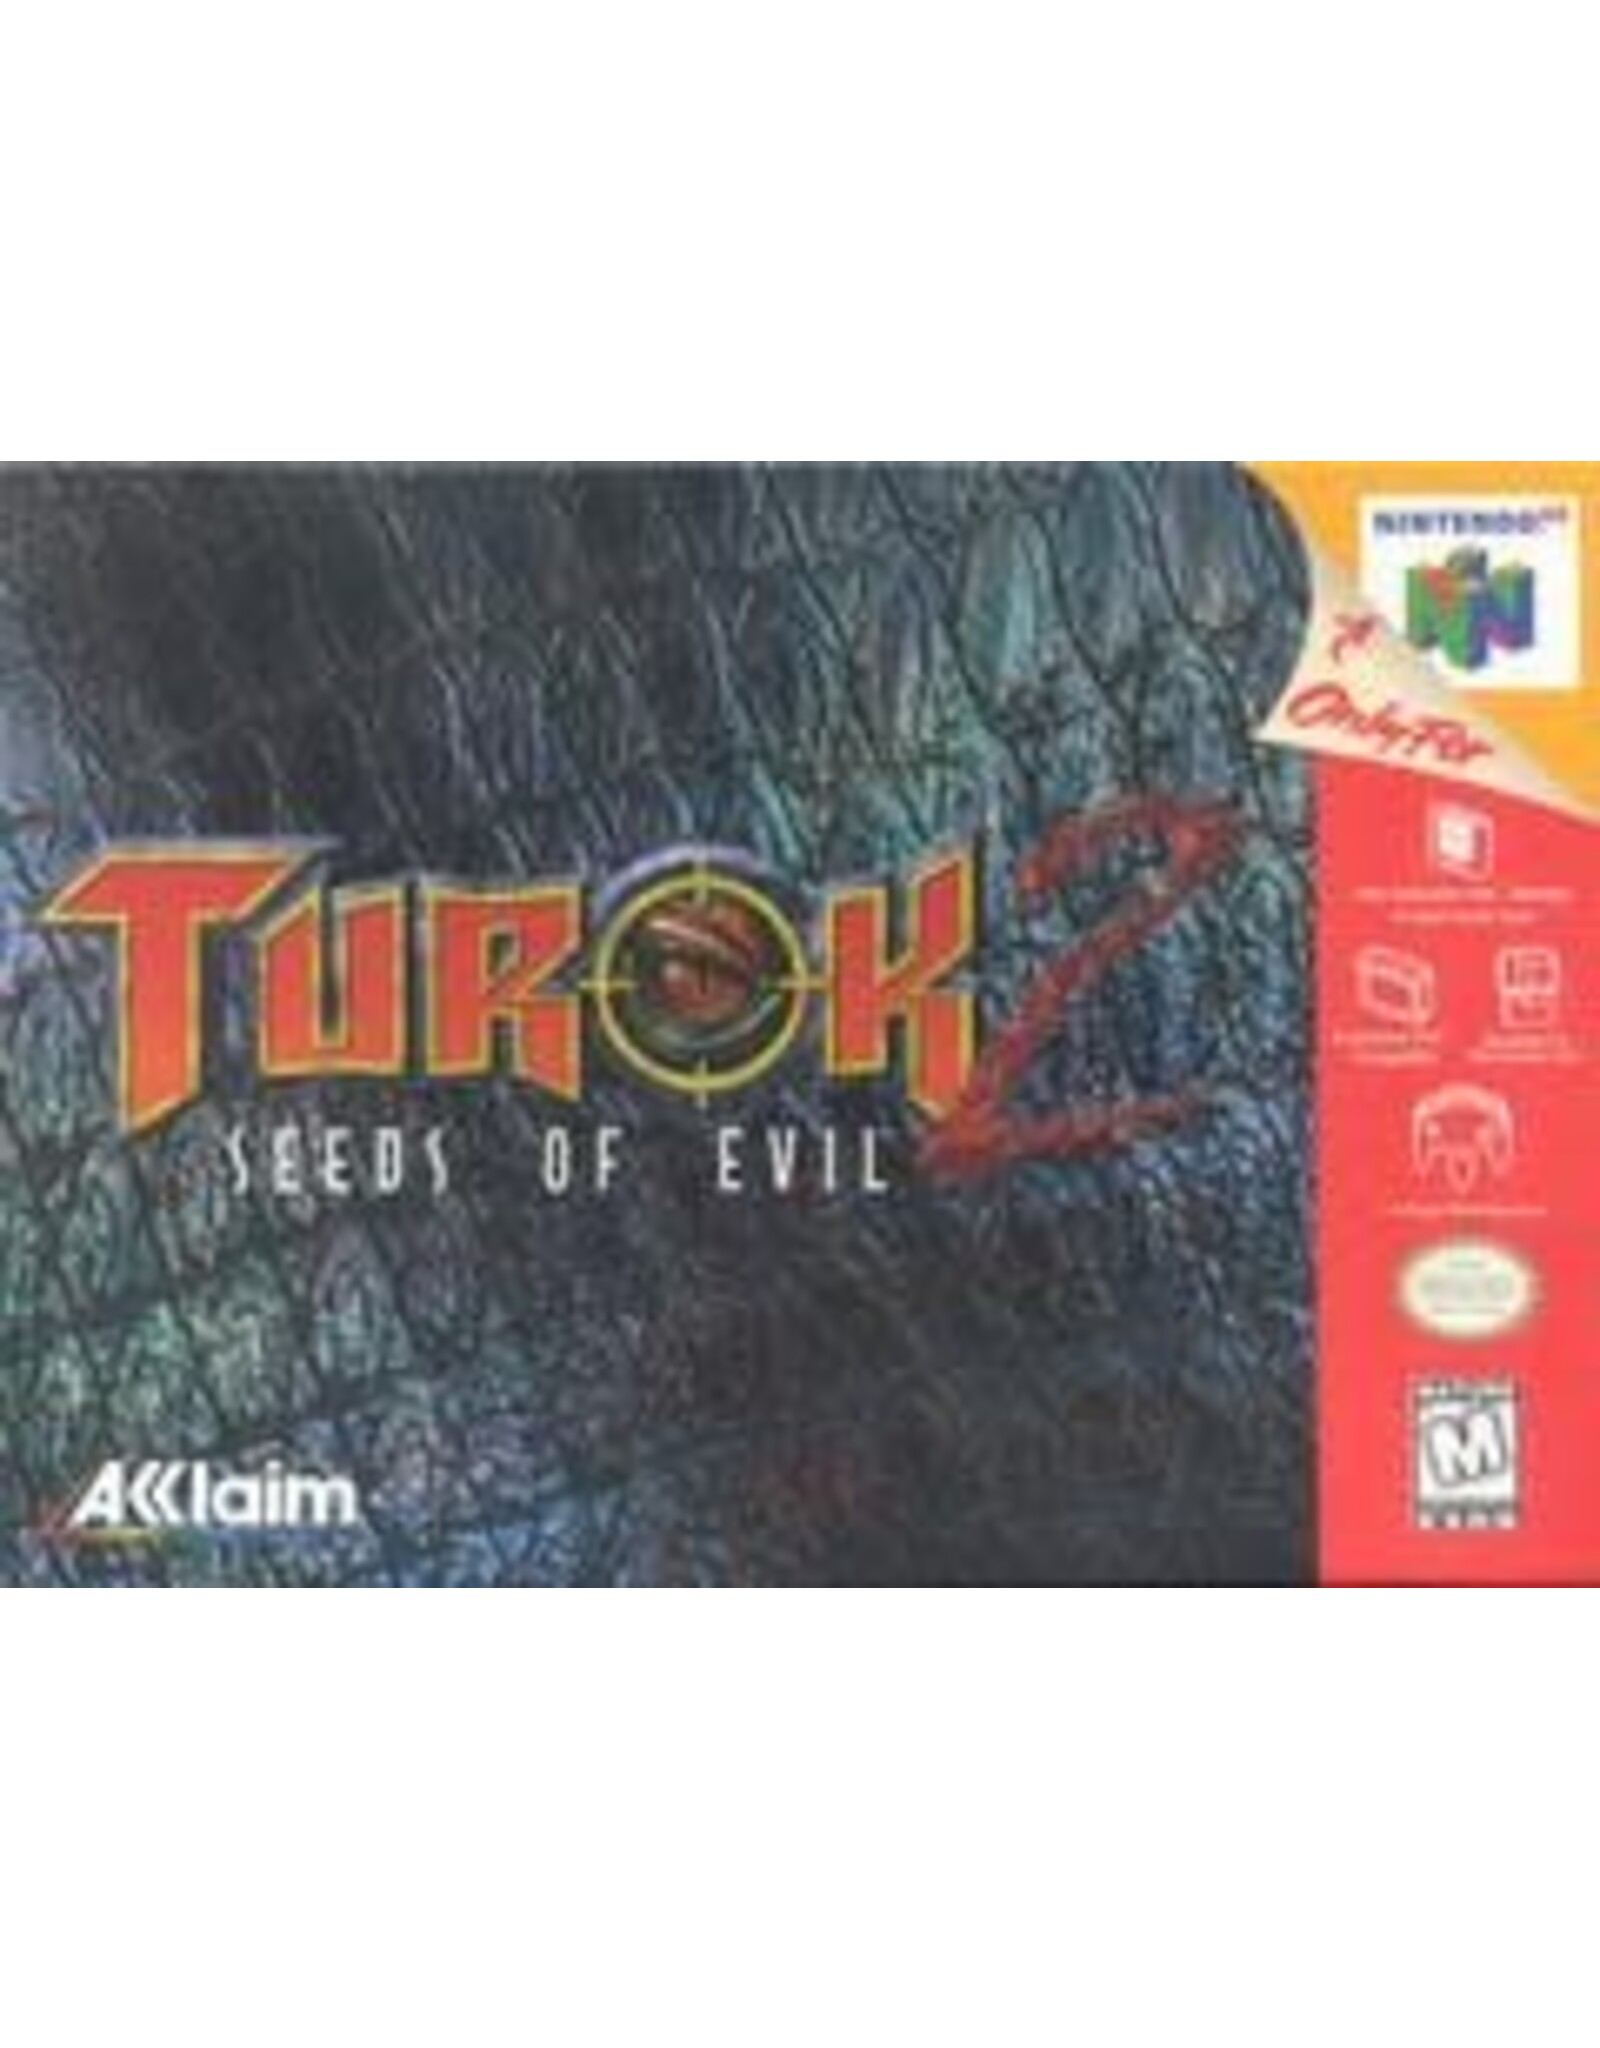 Nintendo 64 Turok 2 Seeds of Evil (Boxed, No Manual, Grey Cart)